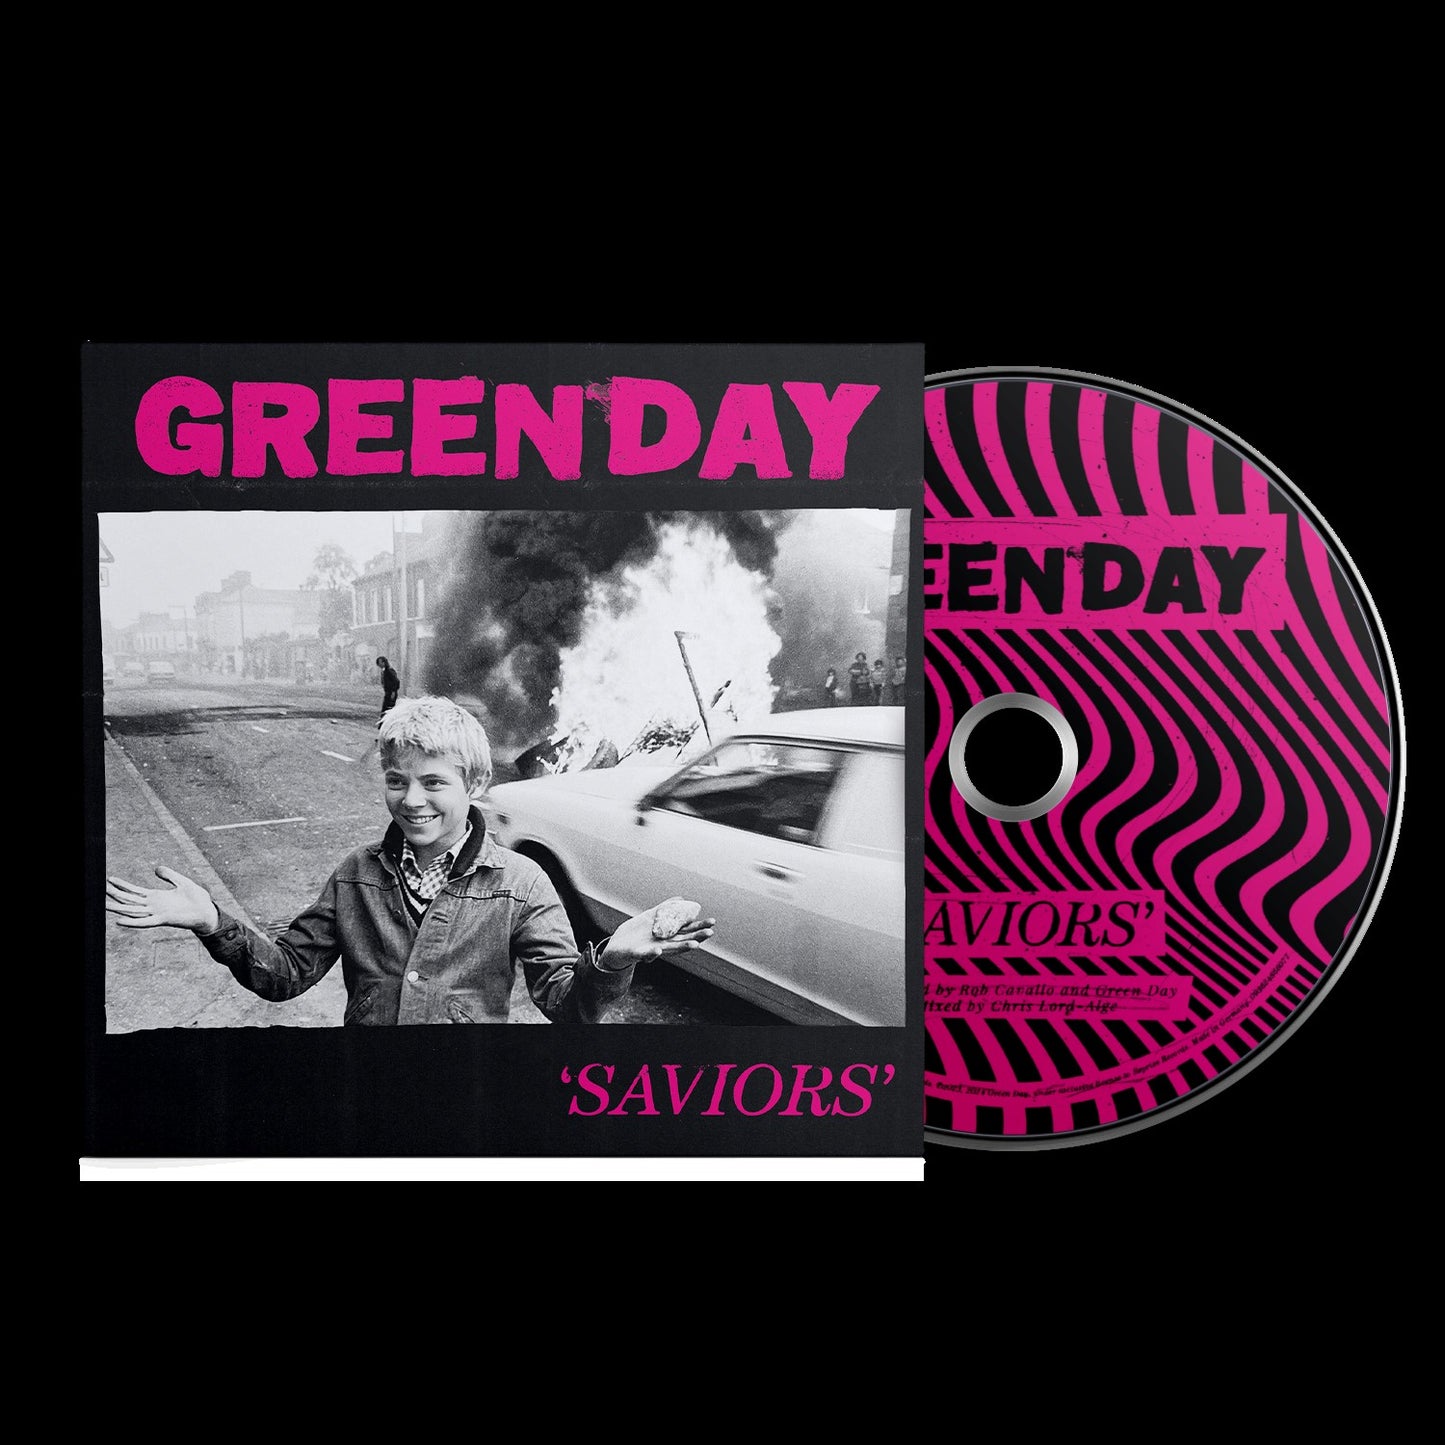 
                  
                    Green Day - Saviours
                  
                